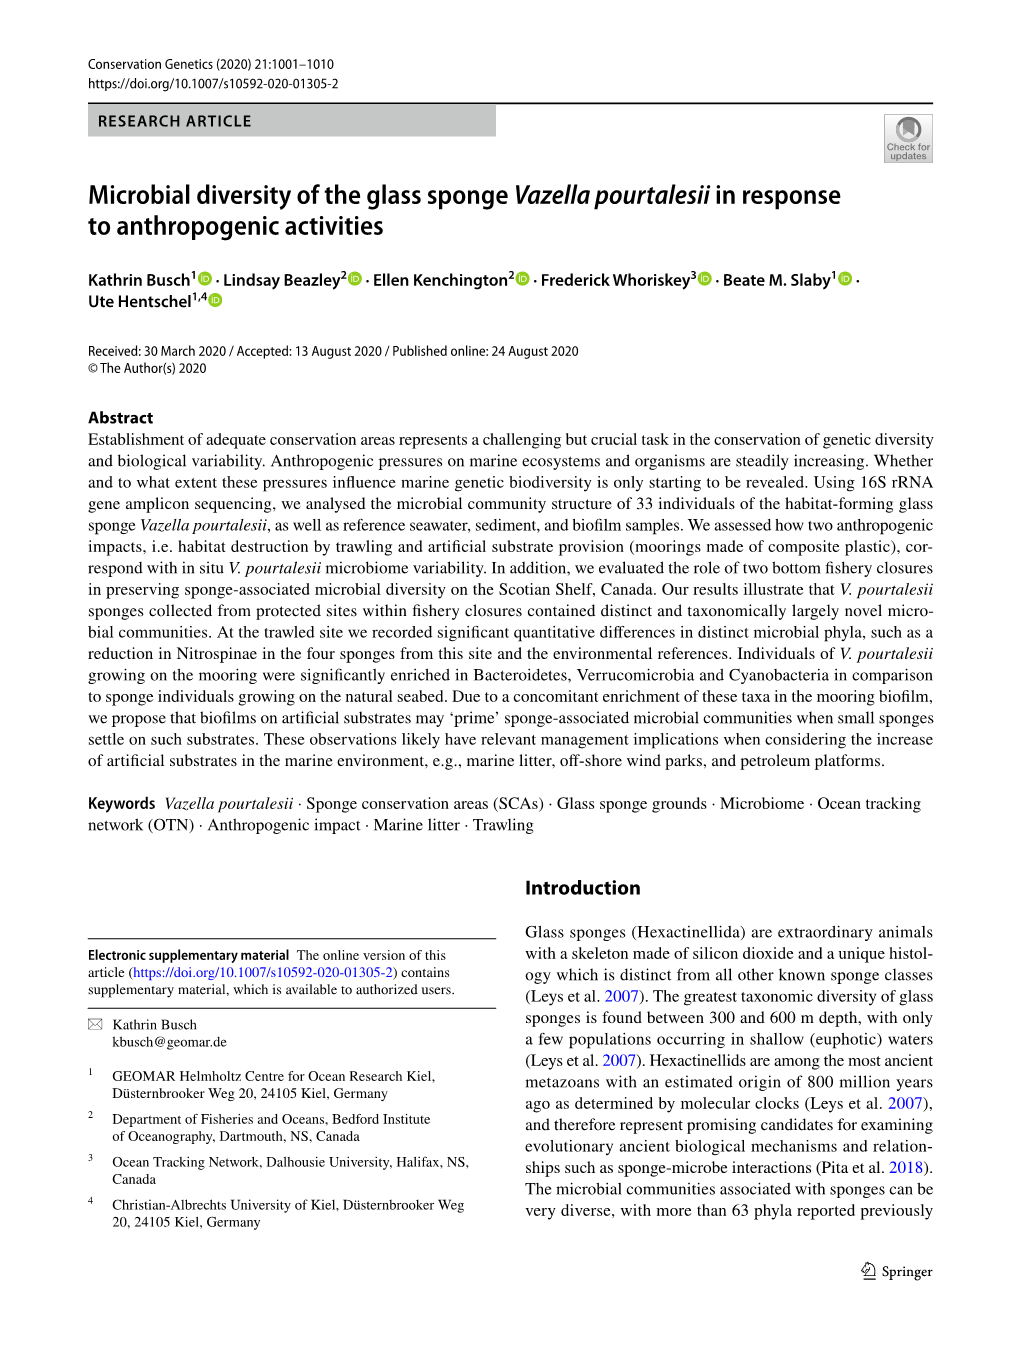 Microbial Diversity of the Glass Sponge Vazella Pourtalesii in Response to Anthropogenic Activities